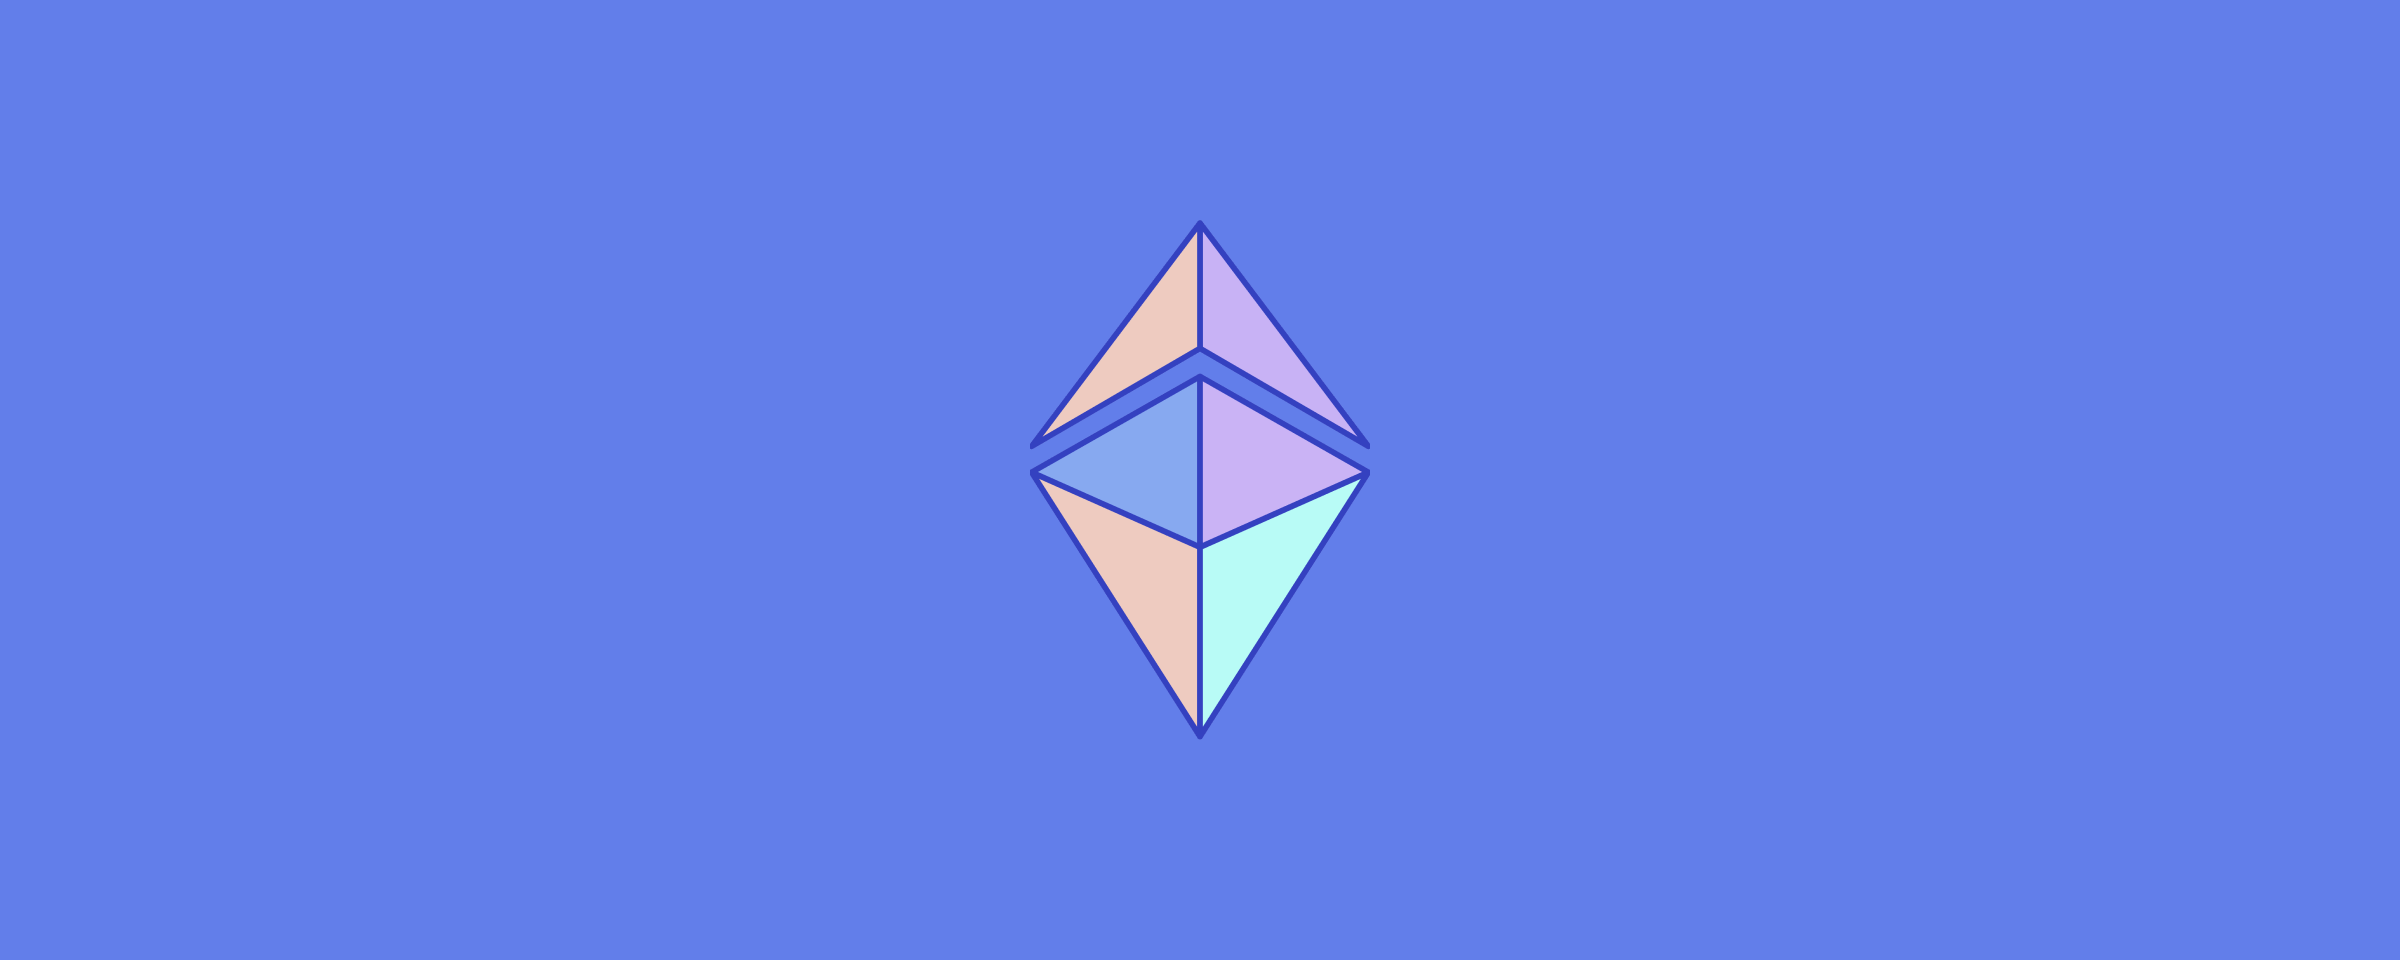 ethereum logo og shapella